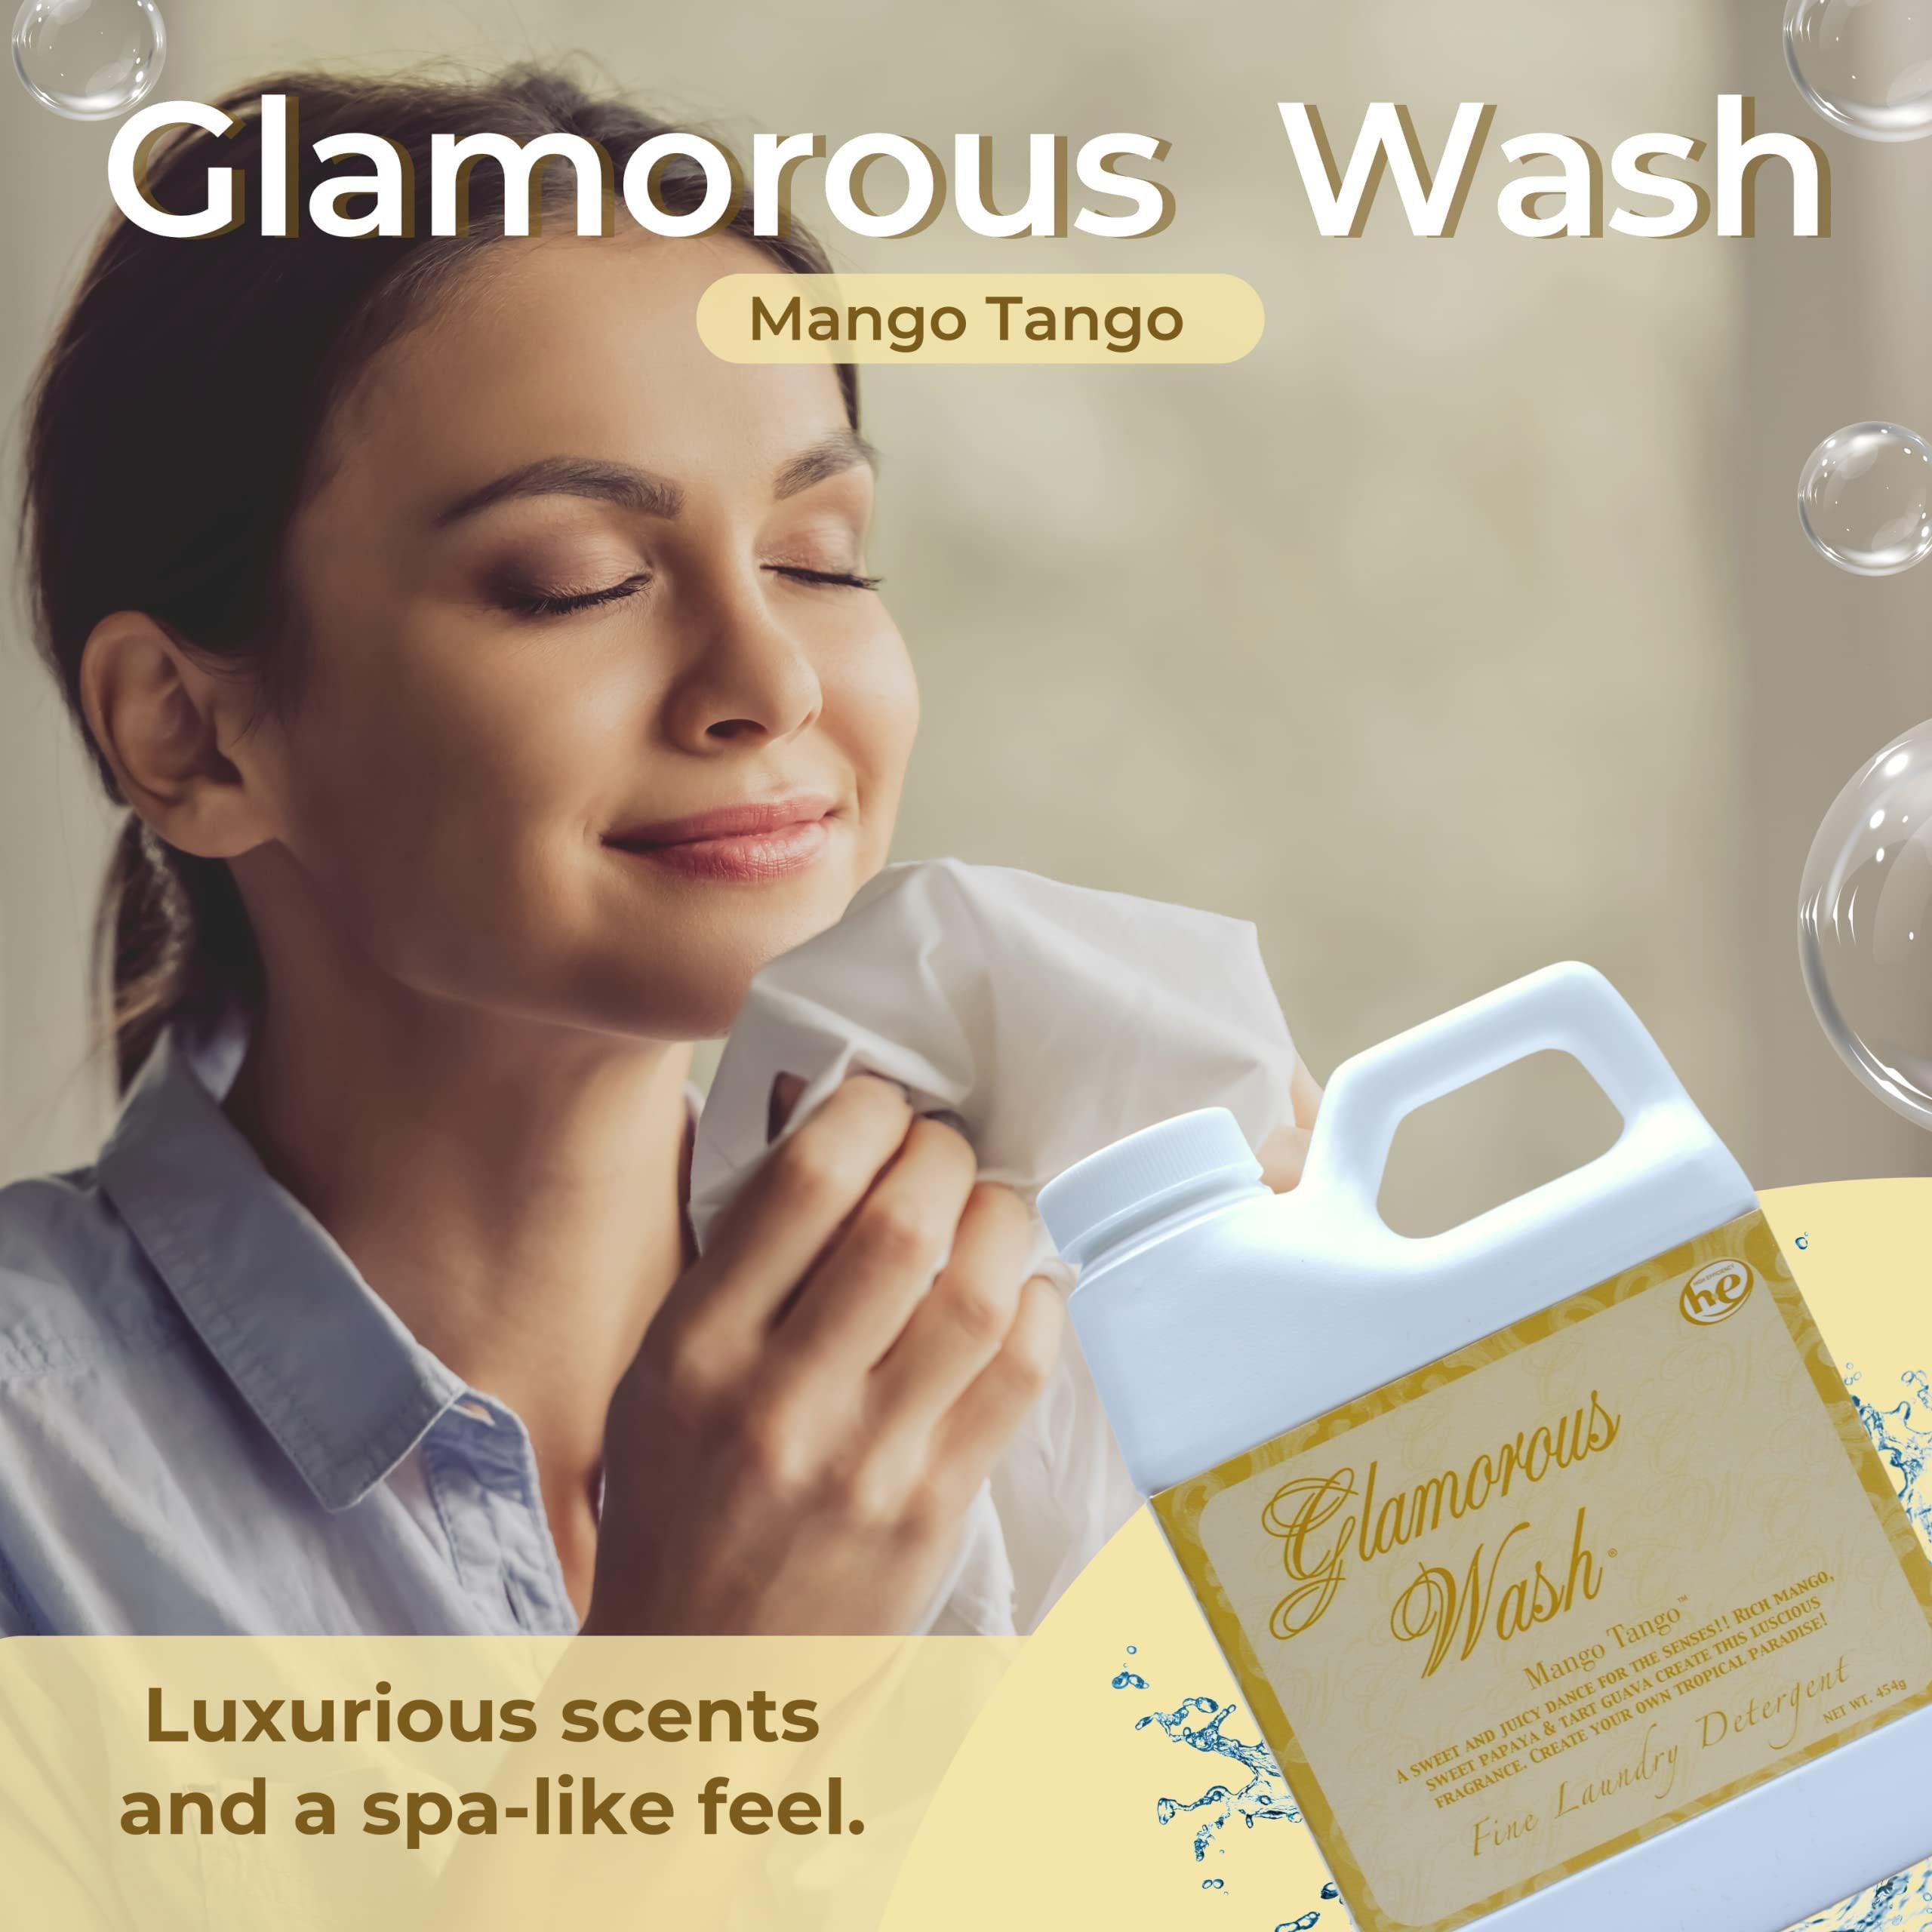 Tyler Candle Company Glamorous Wash Mango Tango Scent Fine Laundry Detergent - Luxury Liquid Laundry Detergent - Hand and Machine Washable - 16 oz, 454 gram with Bonus Multi Purpose Key Chain